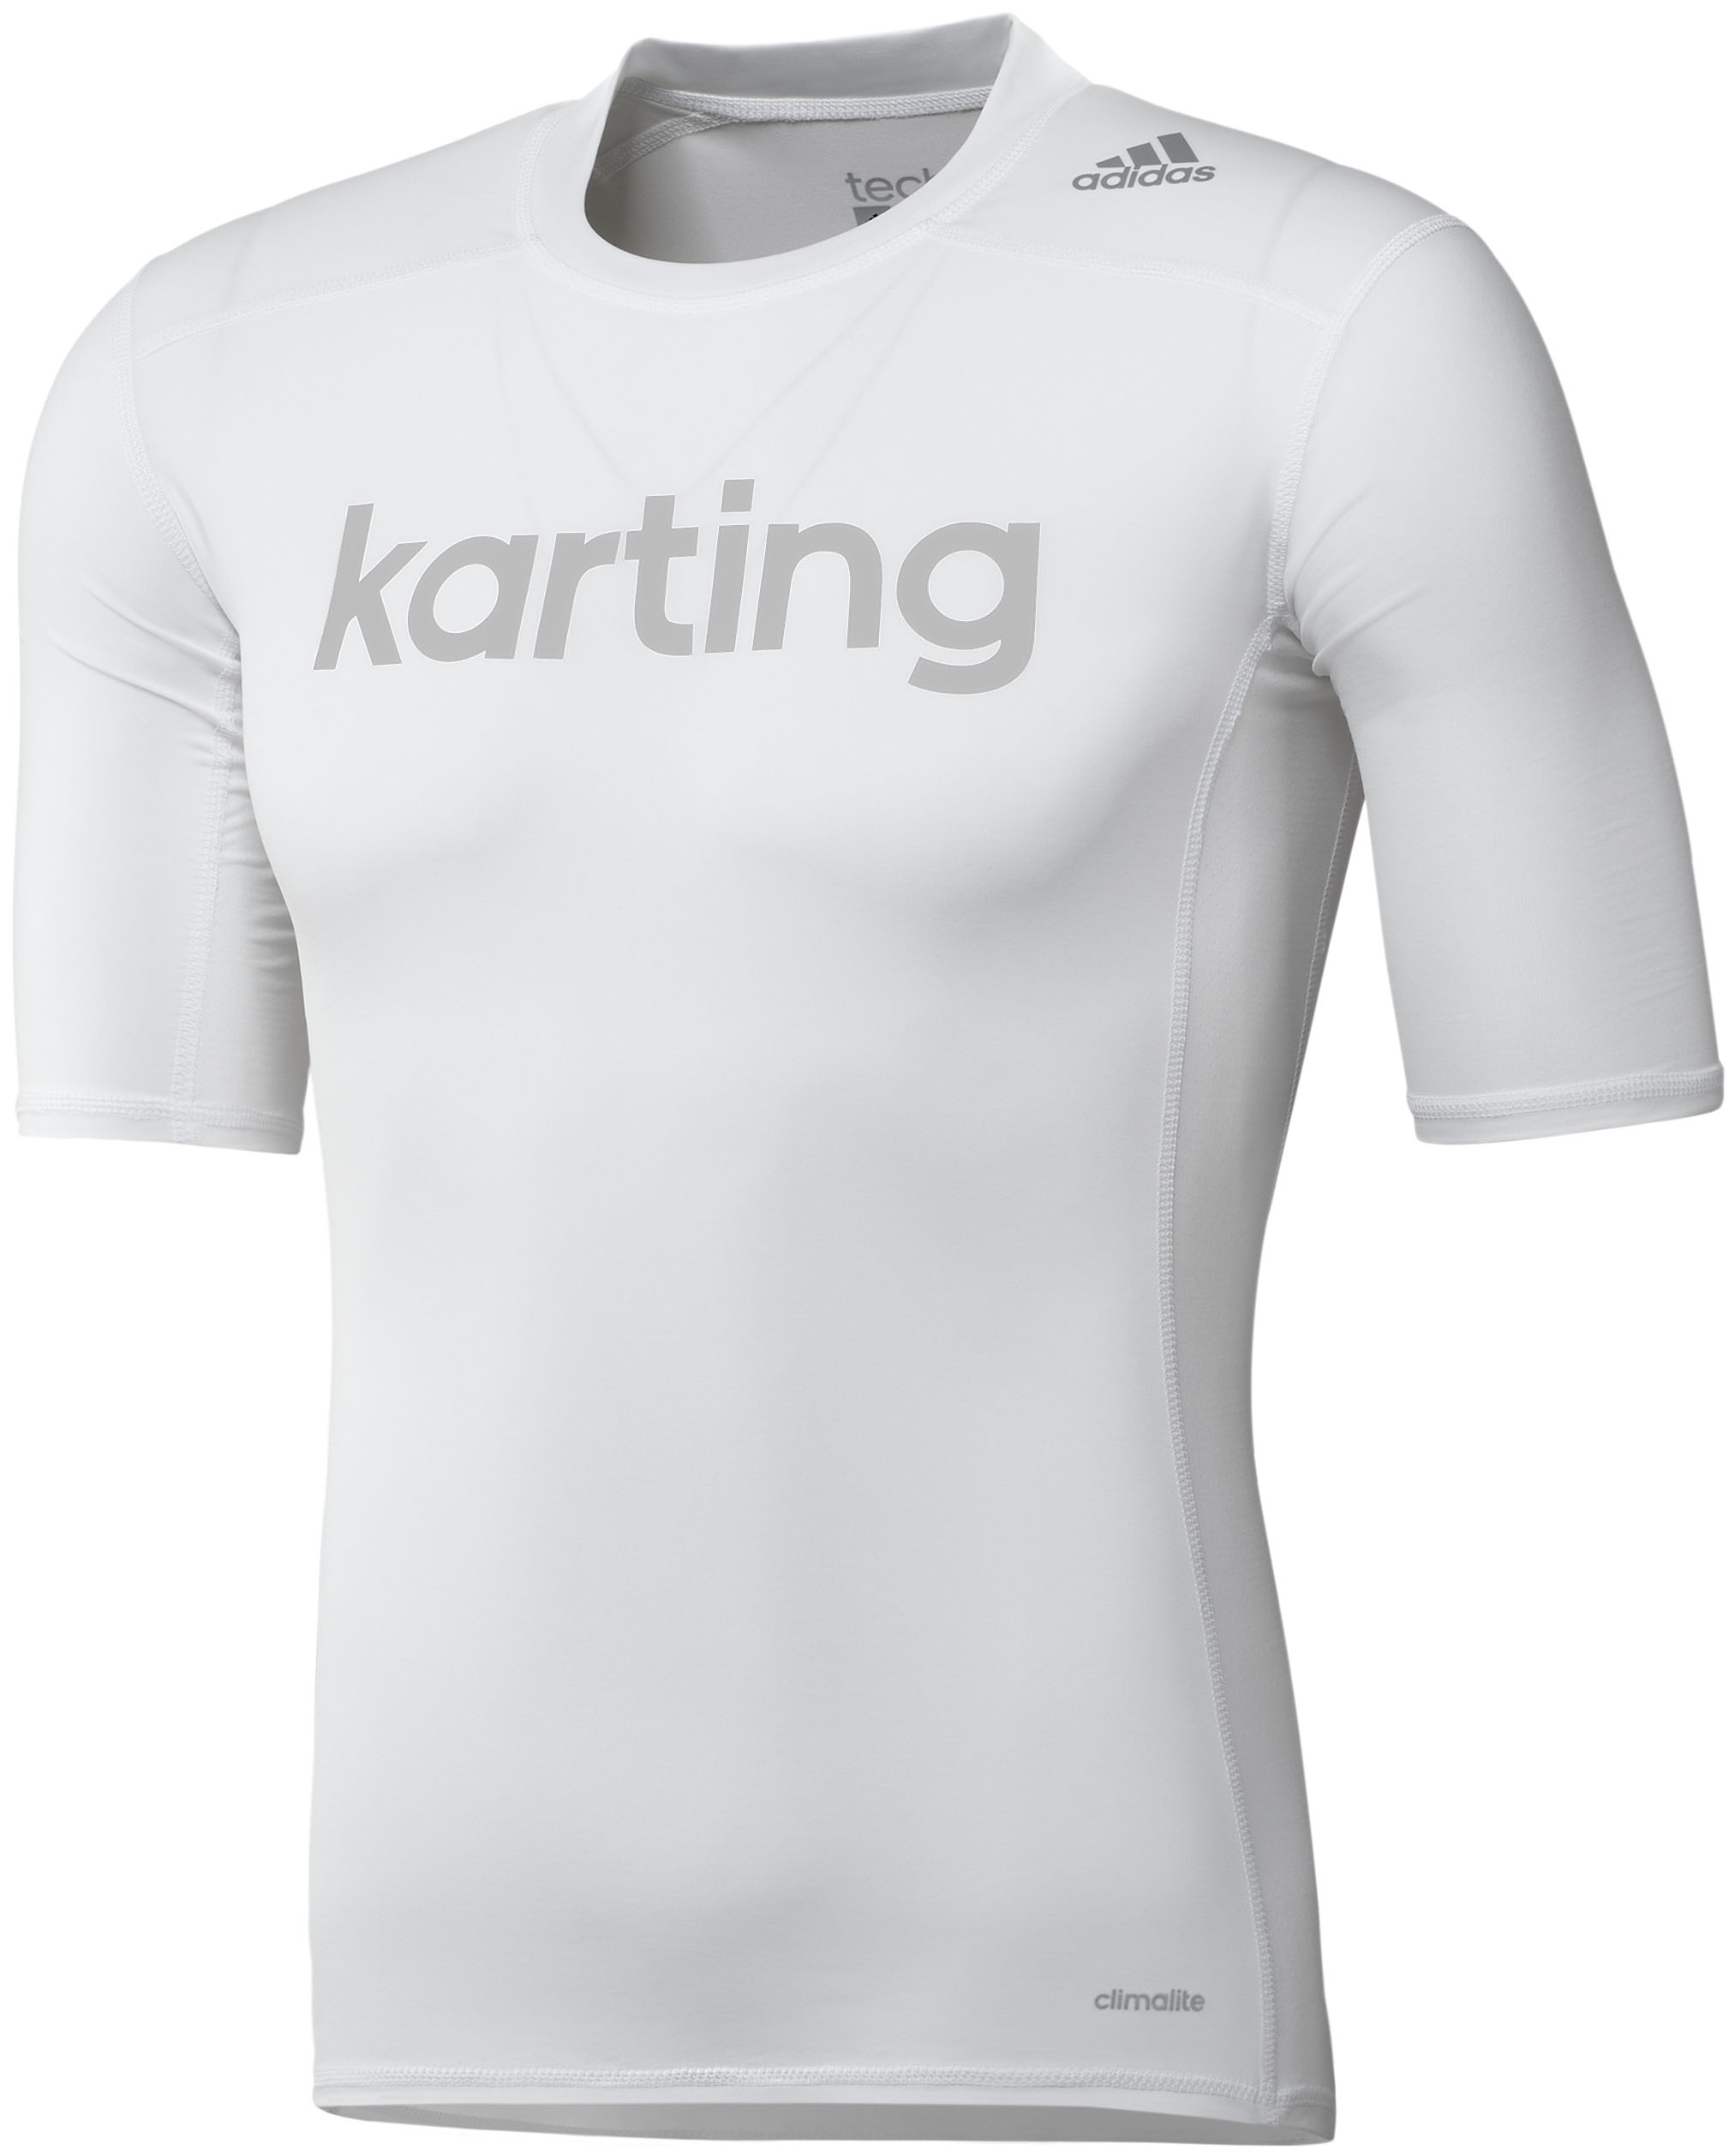 adidas-racing-tshirt-underwear-karting